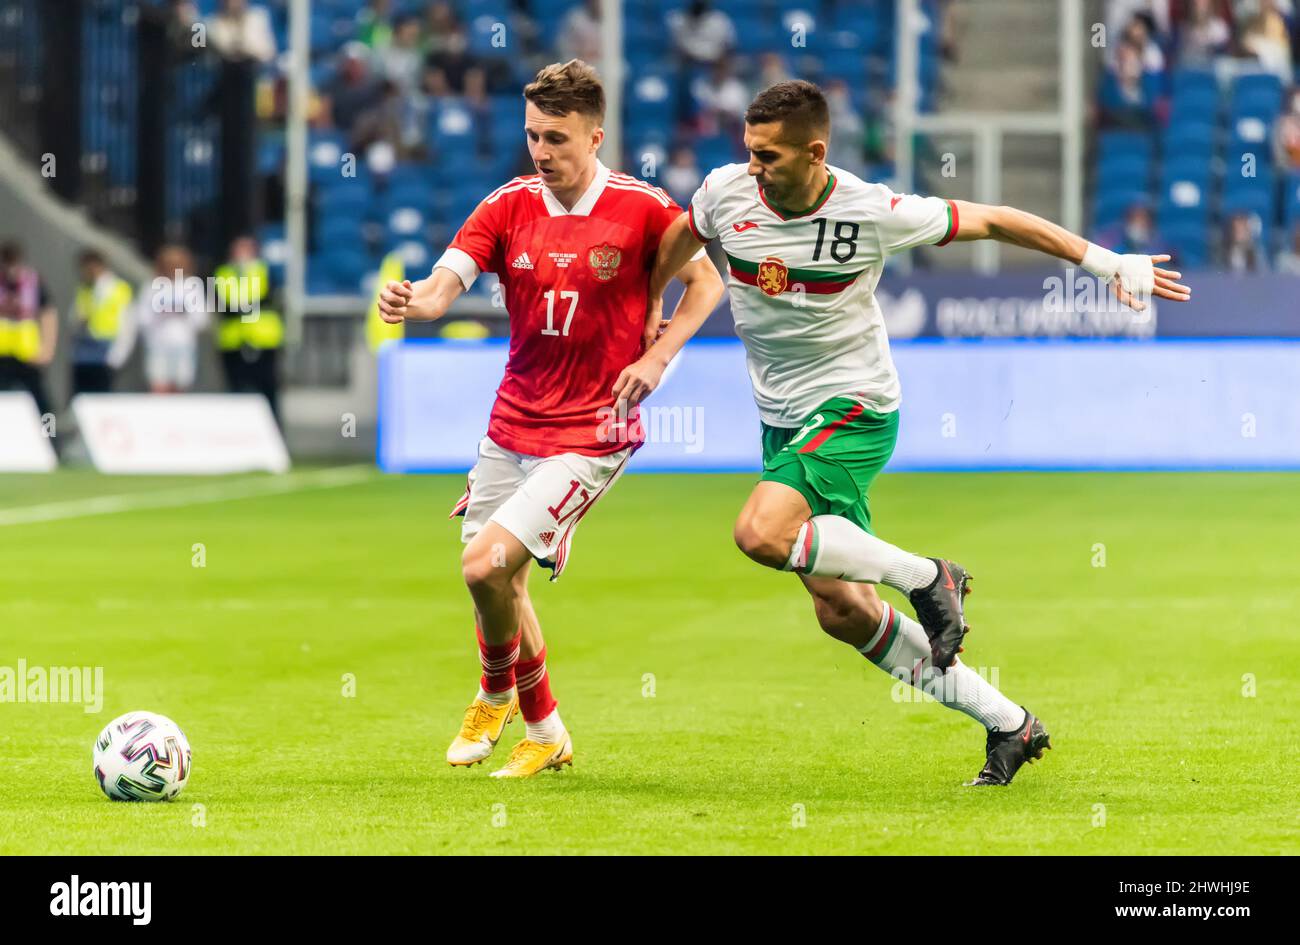 Moscow, Russia – June 5, 2021. Bulgaria national football team midfielder Ivaylo Chochev against Russia midfielder Aleksandr Golovin during internatio Stock Photo